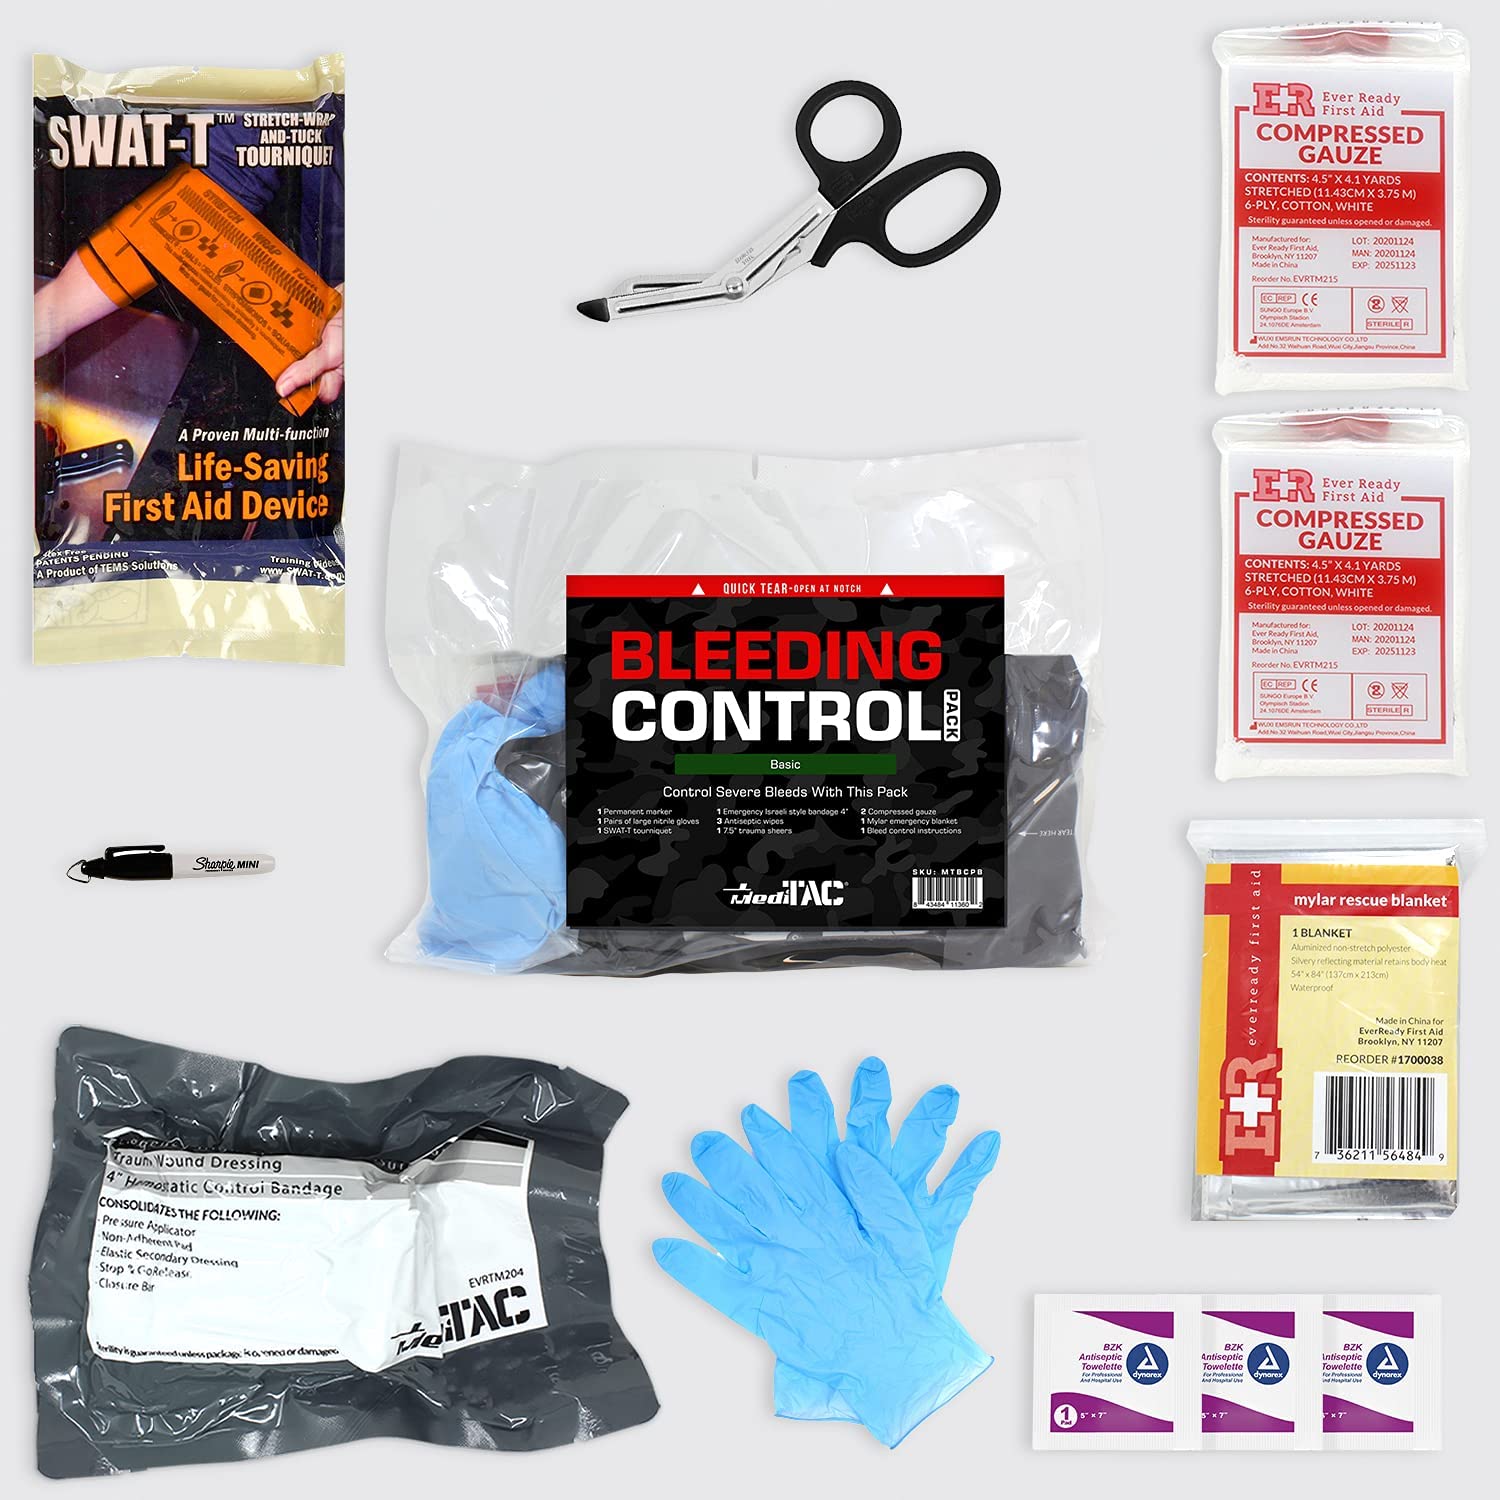 MediTac Basic Bleeding Control Pack Feat. SWAT-T Tourniquet, Emergency Bandage and Compressed Gauze Dressing